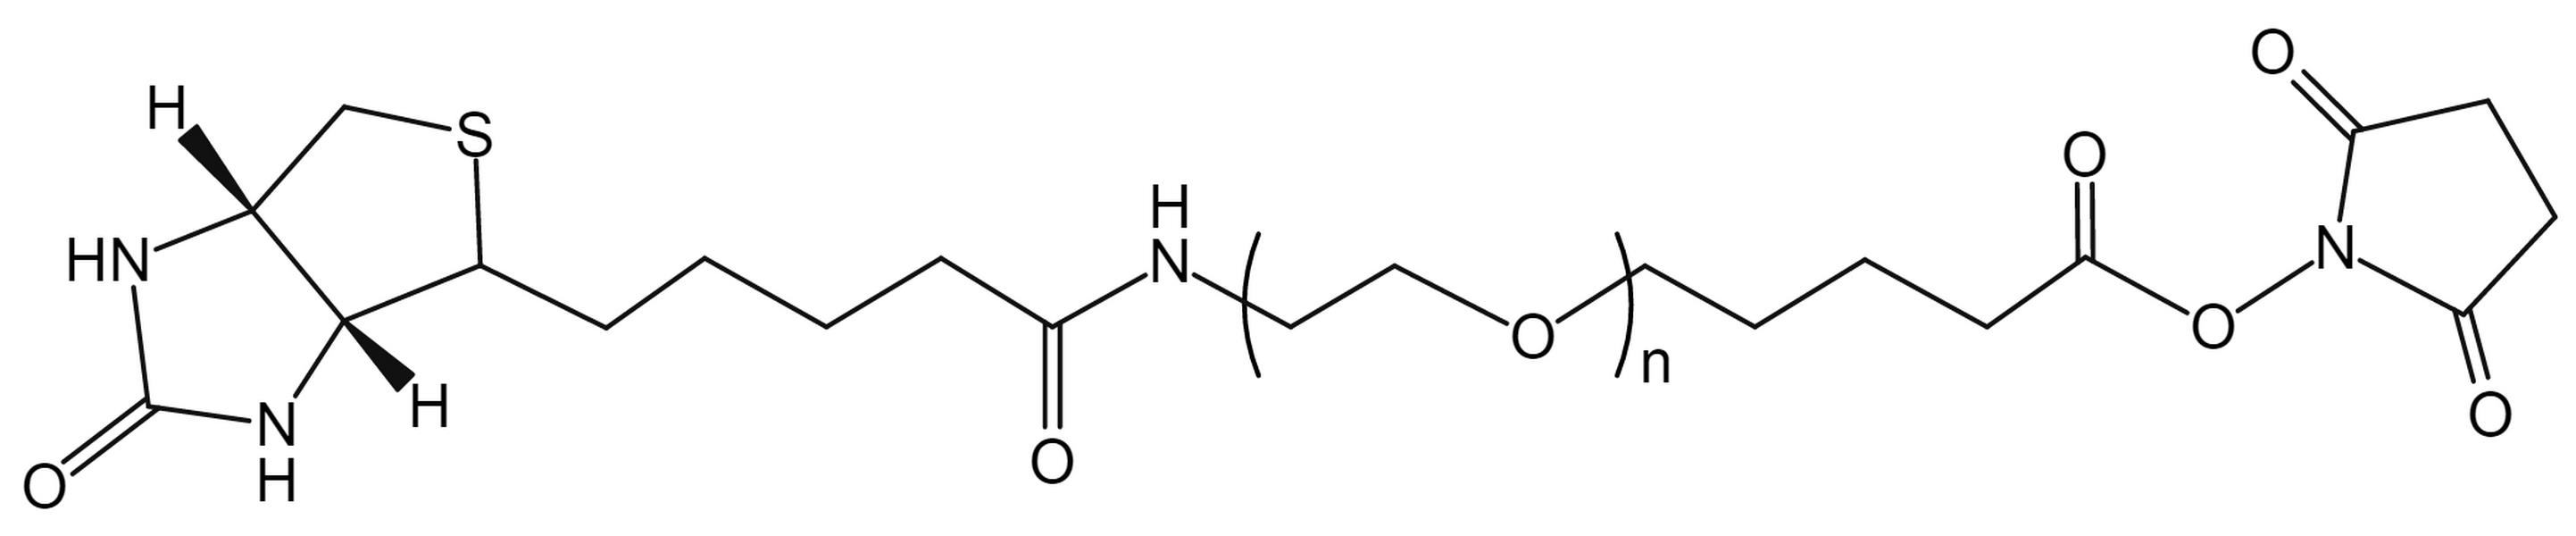 Biotin-PEG-SVA.png